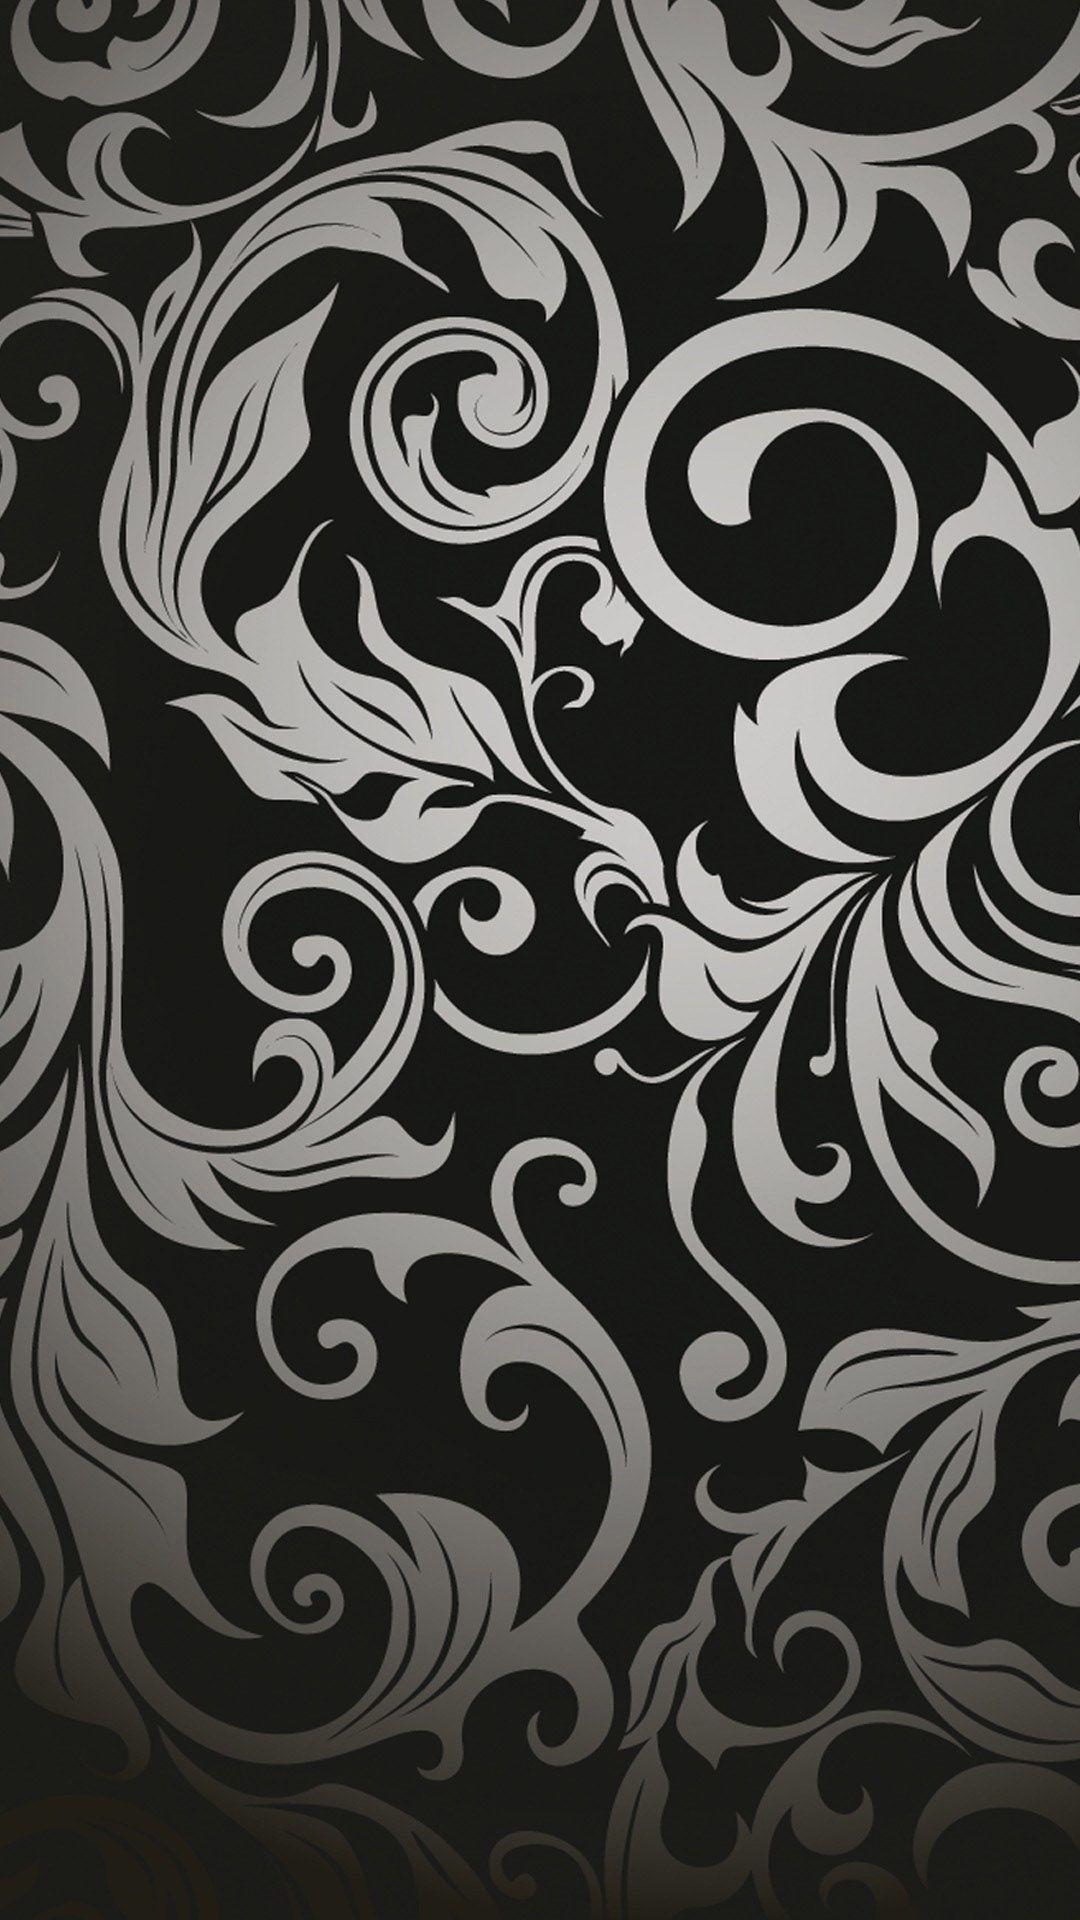 Mobile Wallpapers Black Designs - Wallpaper Cave